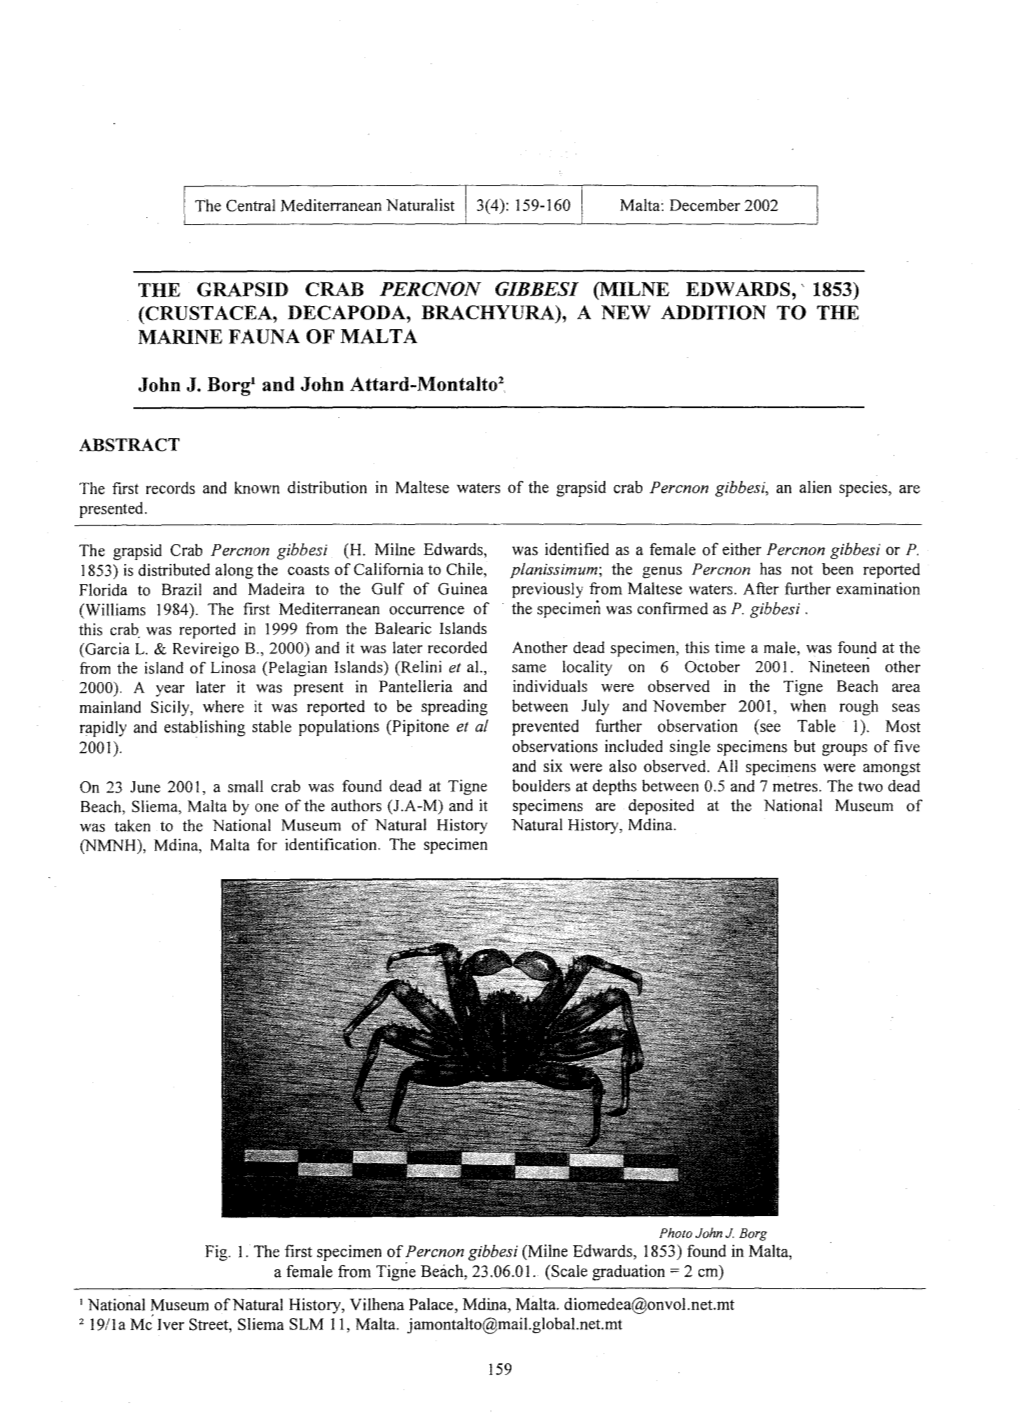 The Grapsid Crab Percnon Gibbesi (Milne Edwards,' 1853) (Crustacea, Decapoda, Brachyura), a New Addition to the Marine Fauna of Malta